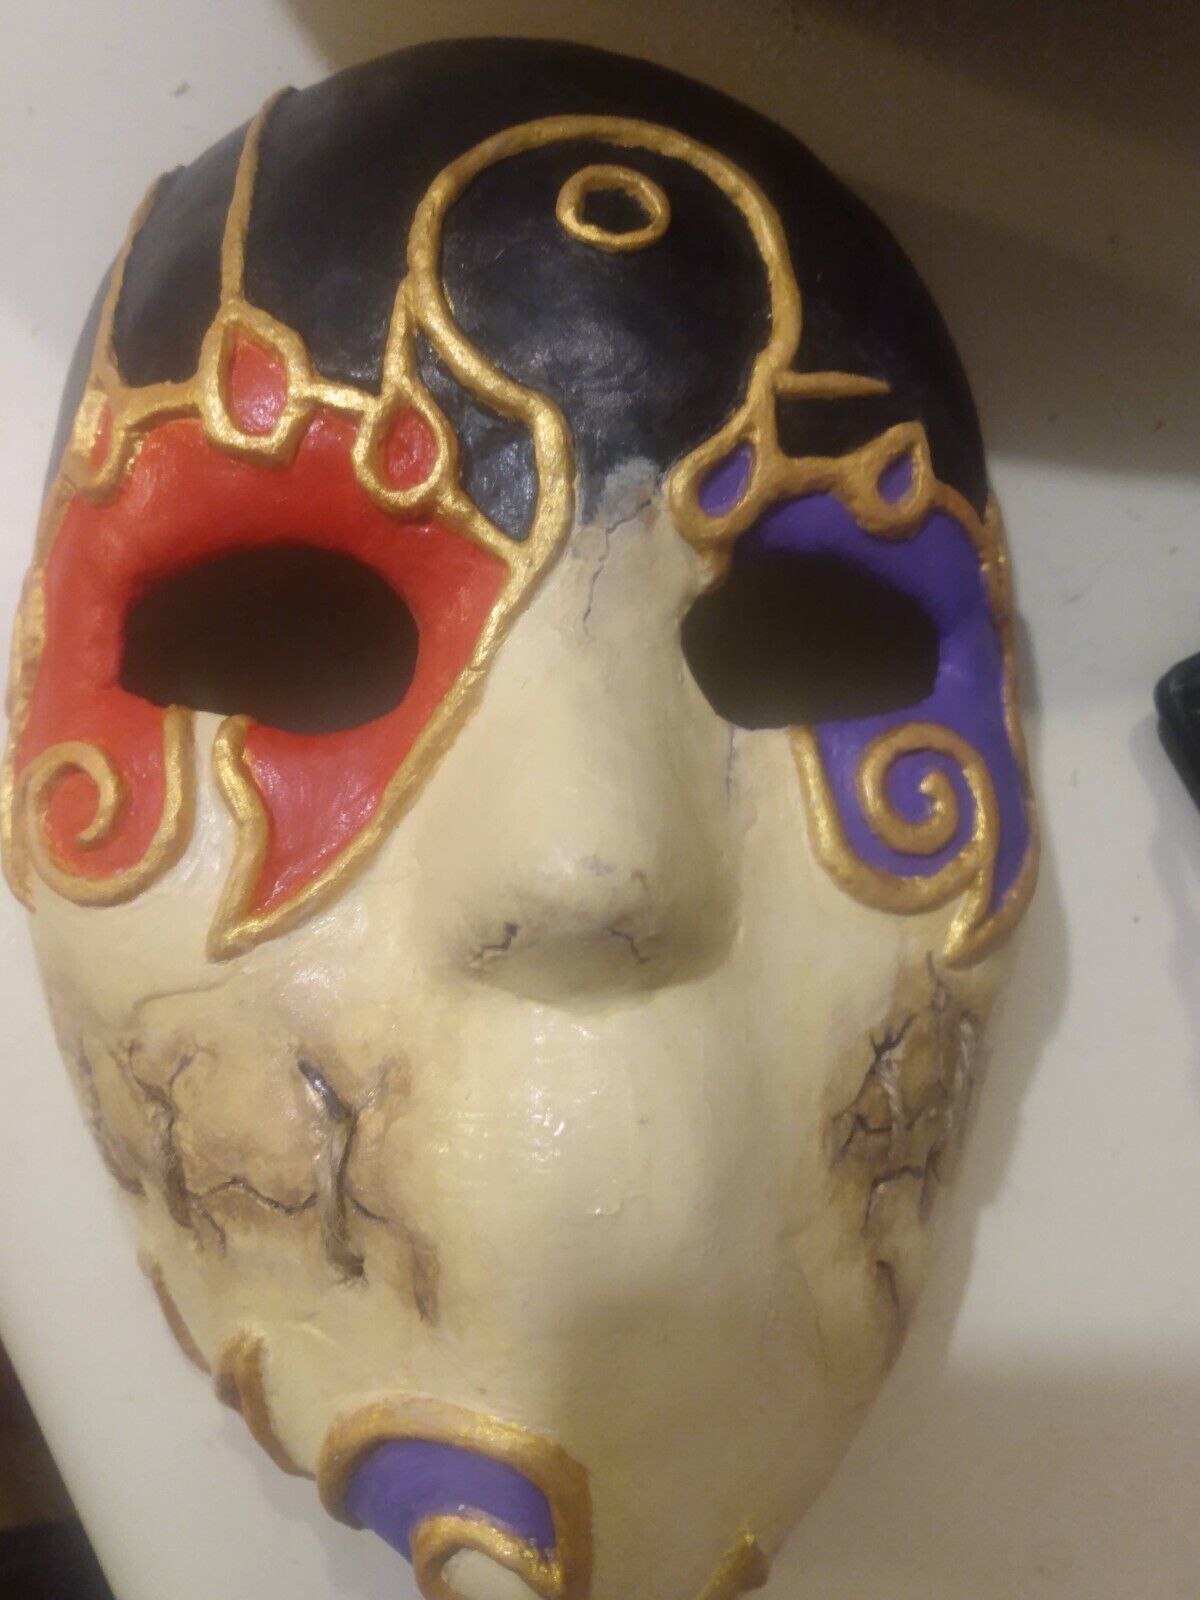 Jack of Blades Soul Mask Replica